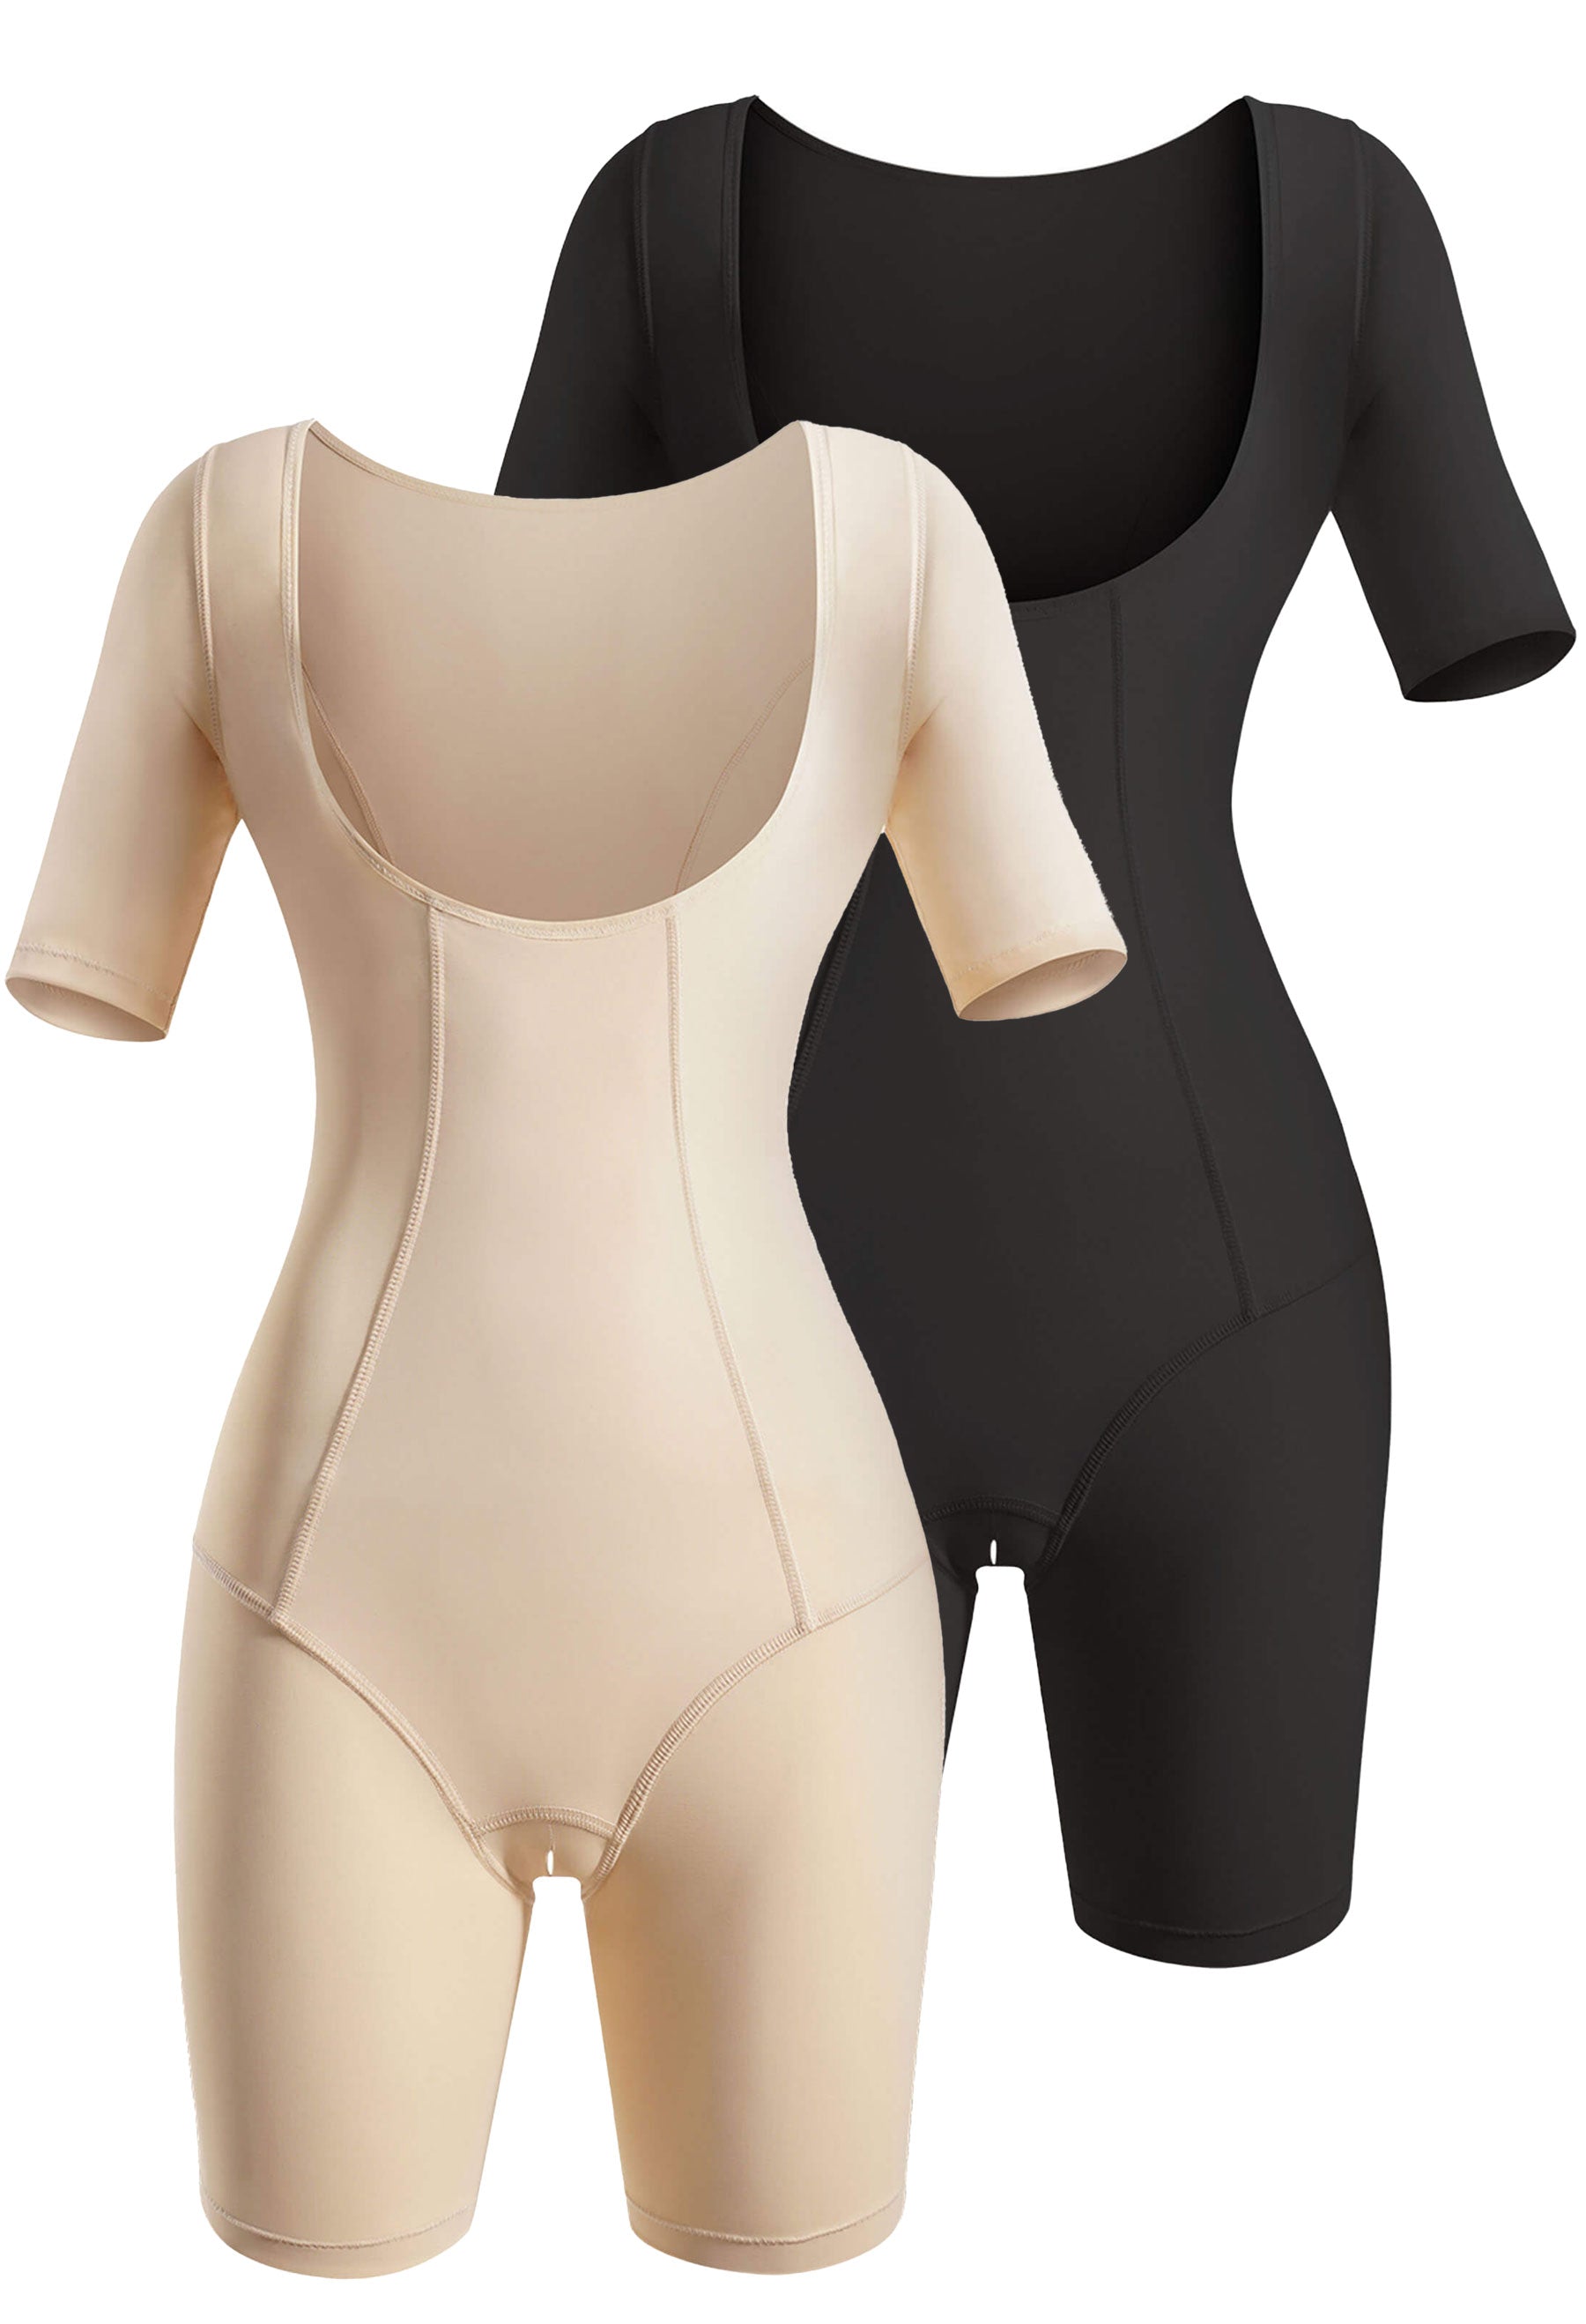 Smoothing Bodysuit Brief Shaper  Bodysuit, Smooth fit, Shapewear